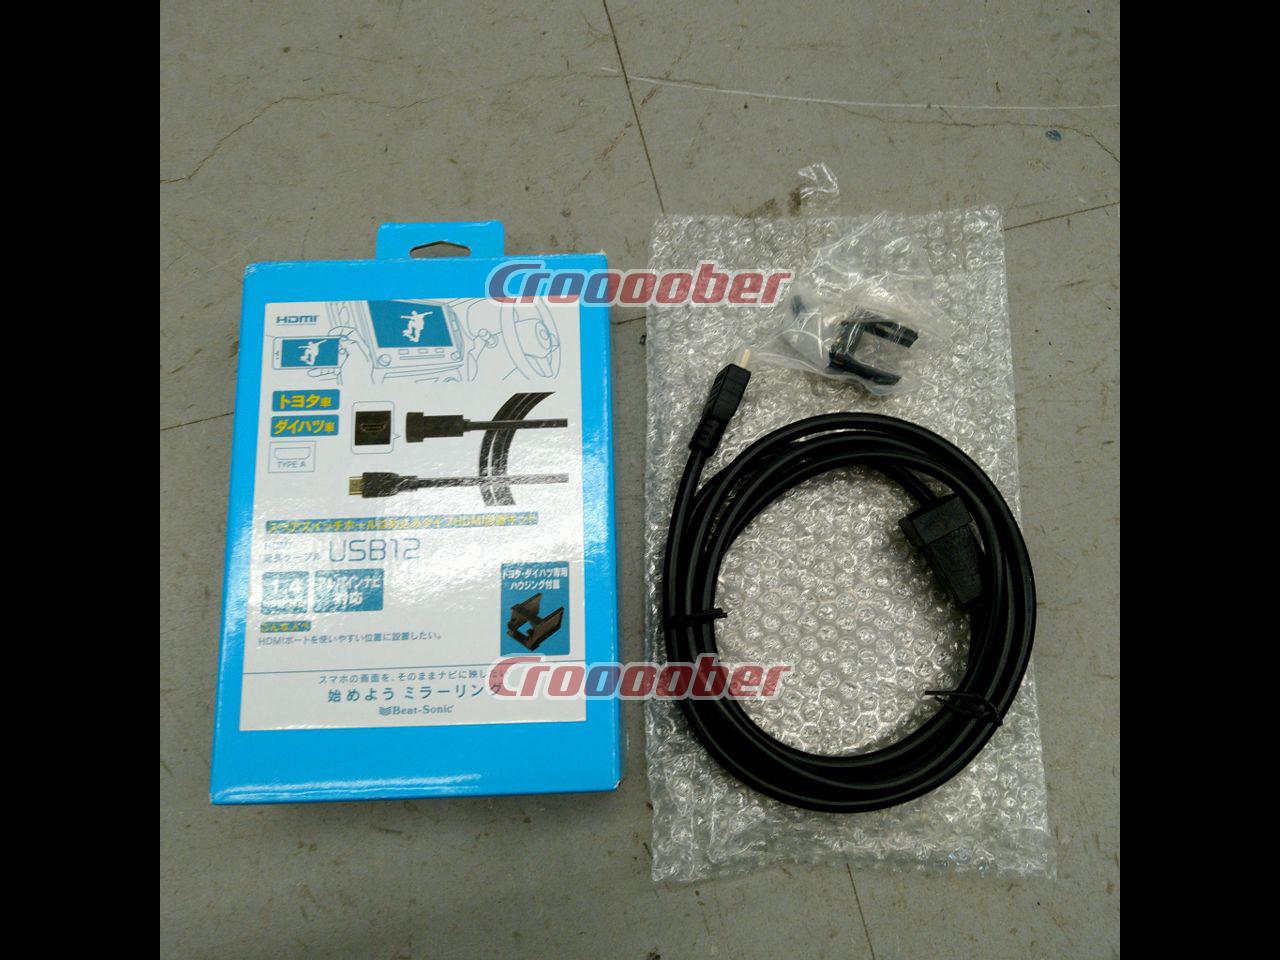 Beat-Sonic USB12 HDMI延長ケーブル トヨタ・ダイハツ車用 | カーAV